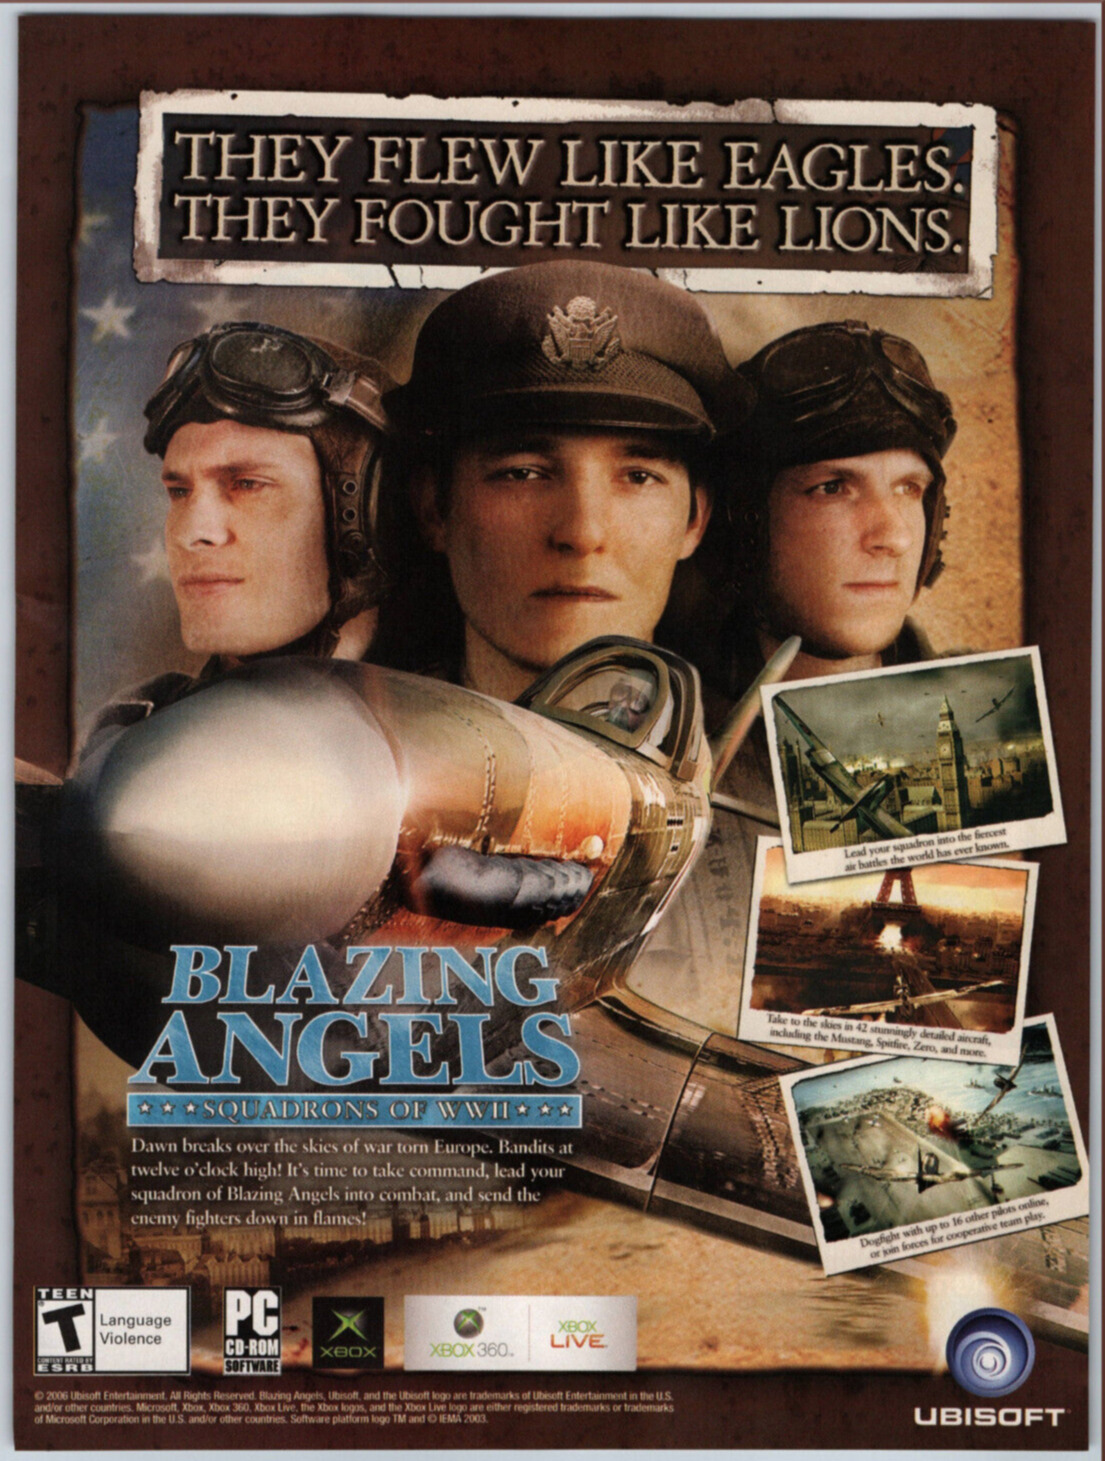 Blazing Angels Ubisoft - Video Game Print Ad / Poster Promo Art 2006